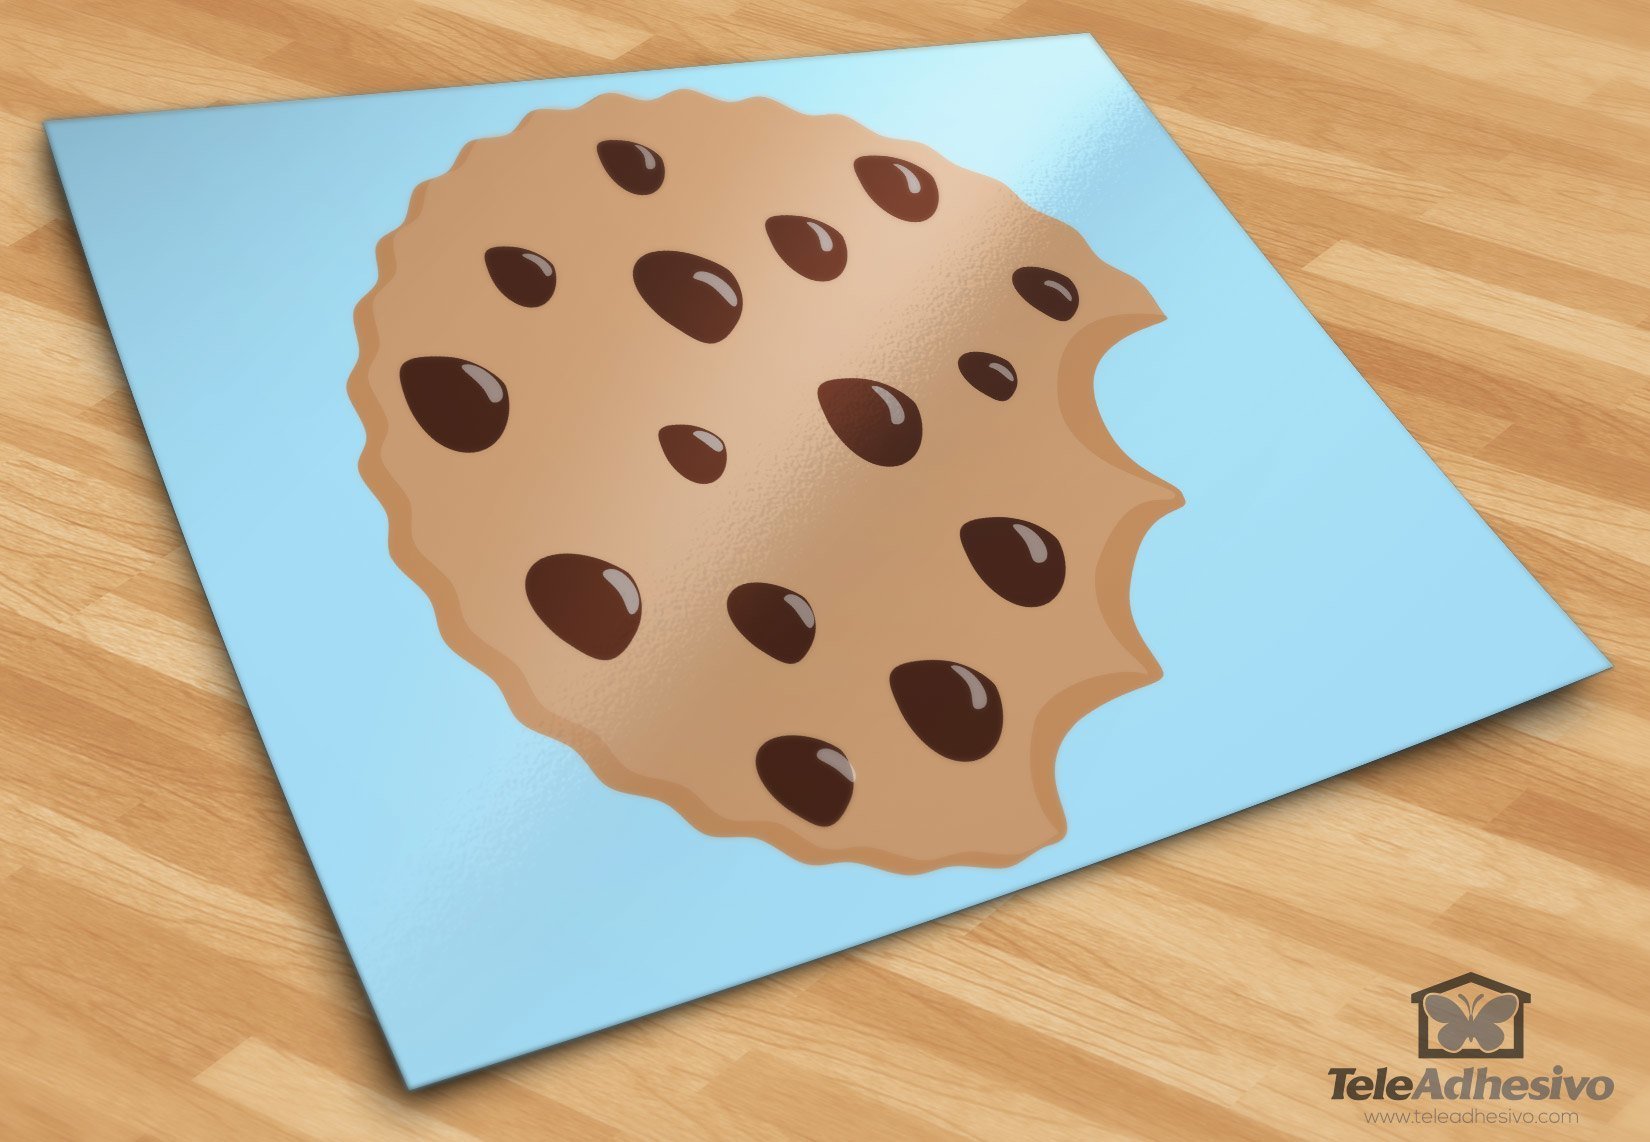 Adesivi per Bambini: Cookie